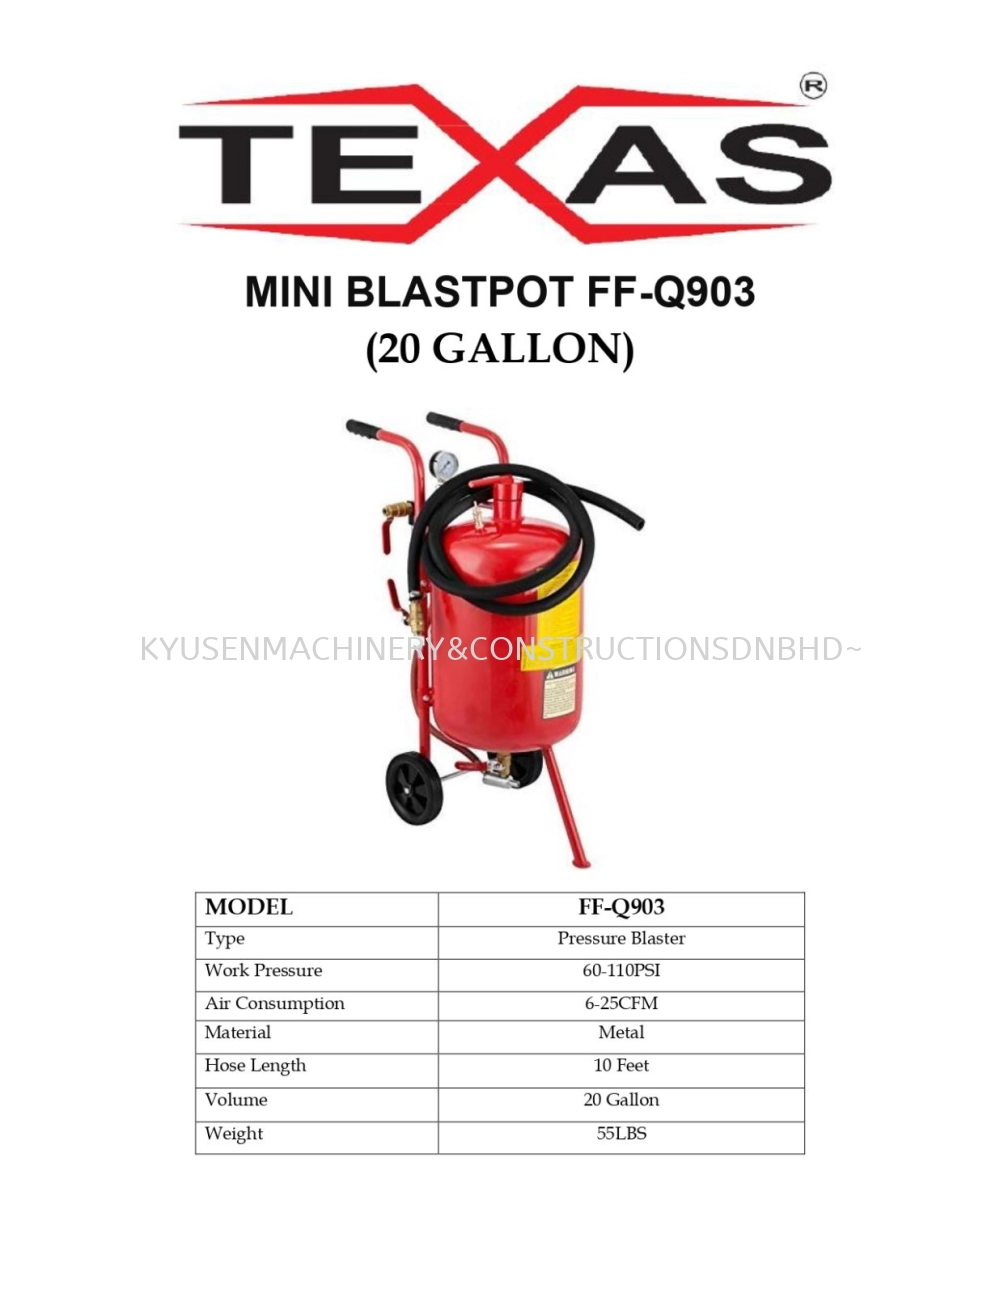 Texas Pressure Blaster FF-Q903 (20 Gallon)